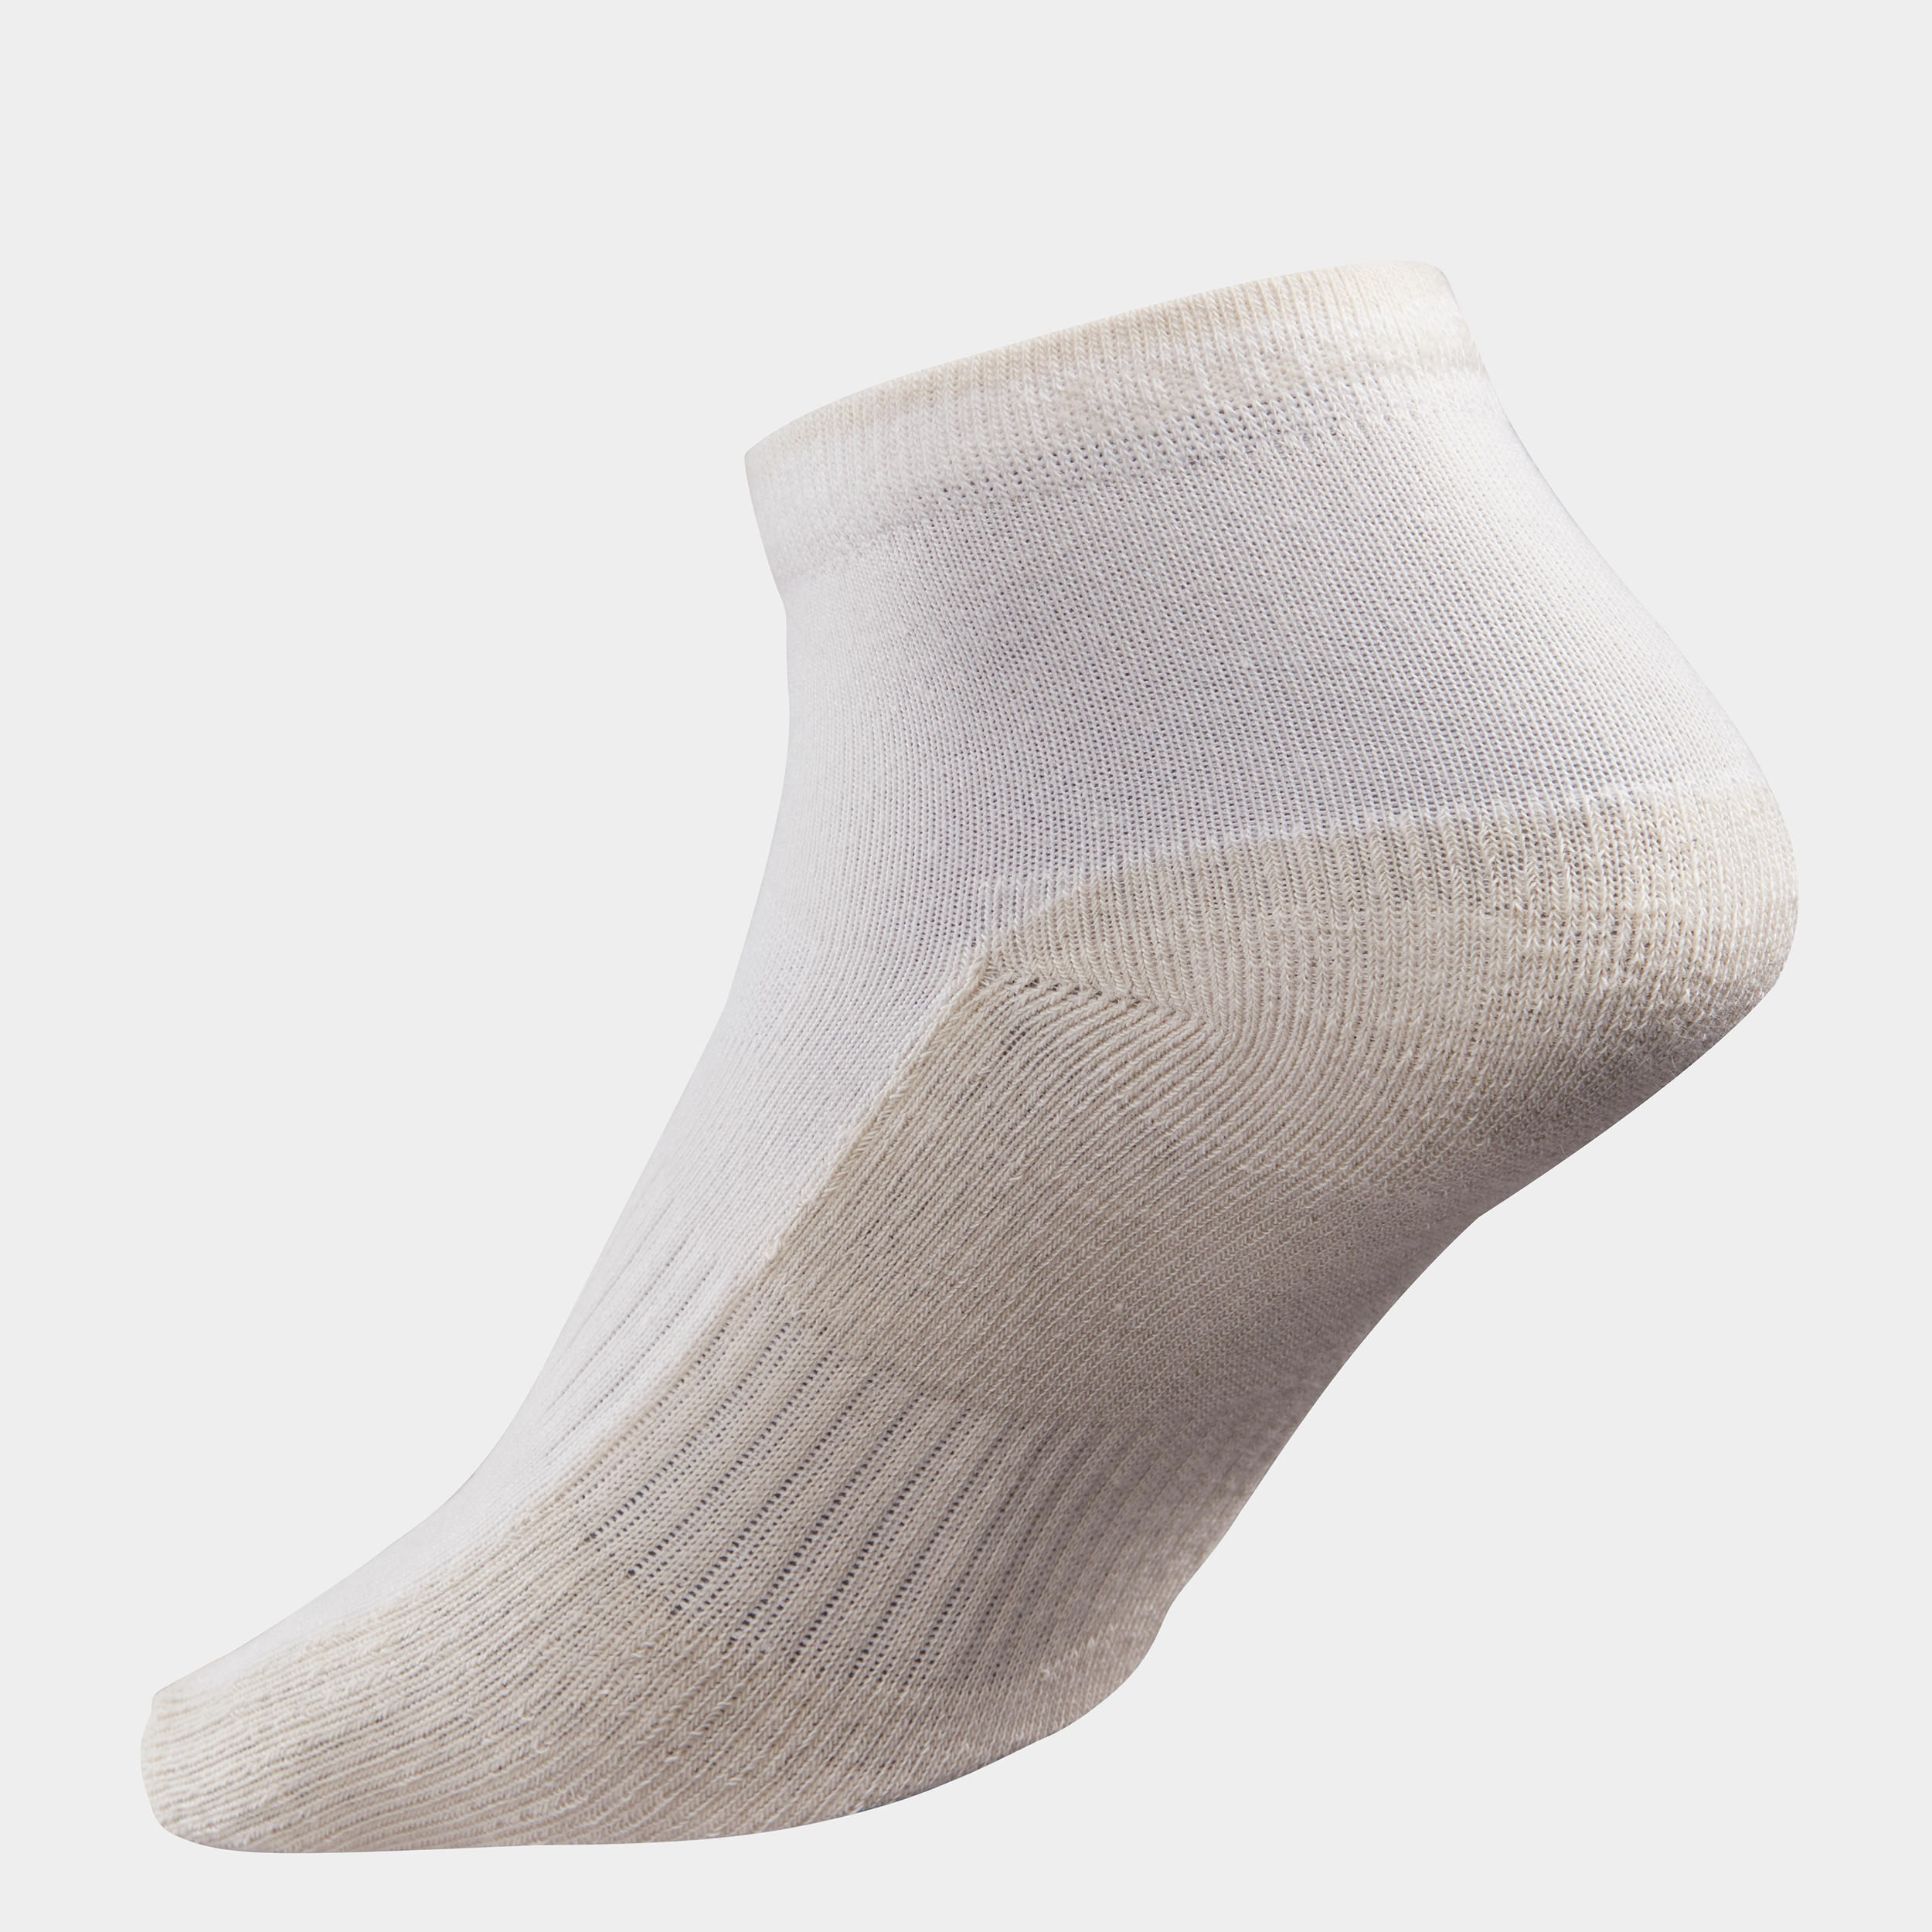 Country walking socks - NH 100 Mid - X 2 pairs - Linen 2/6